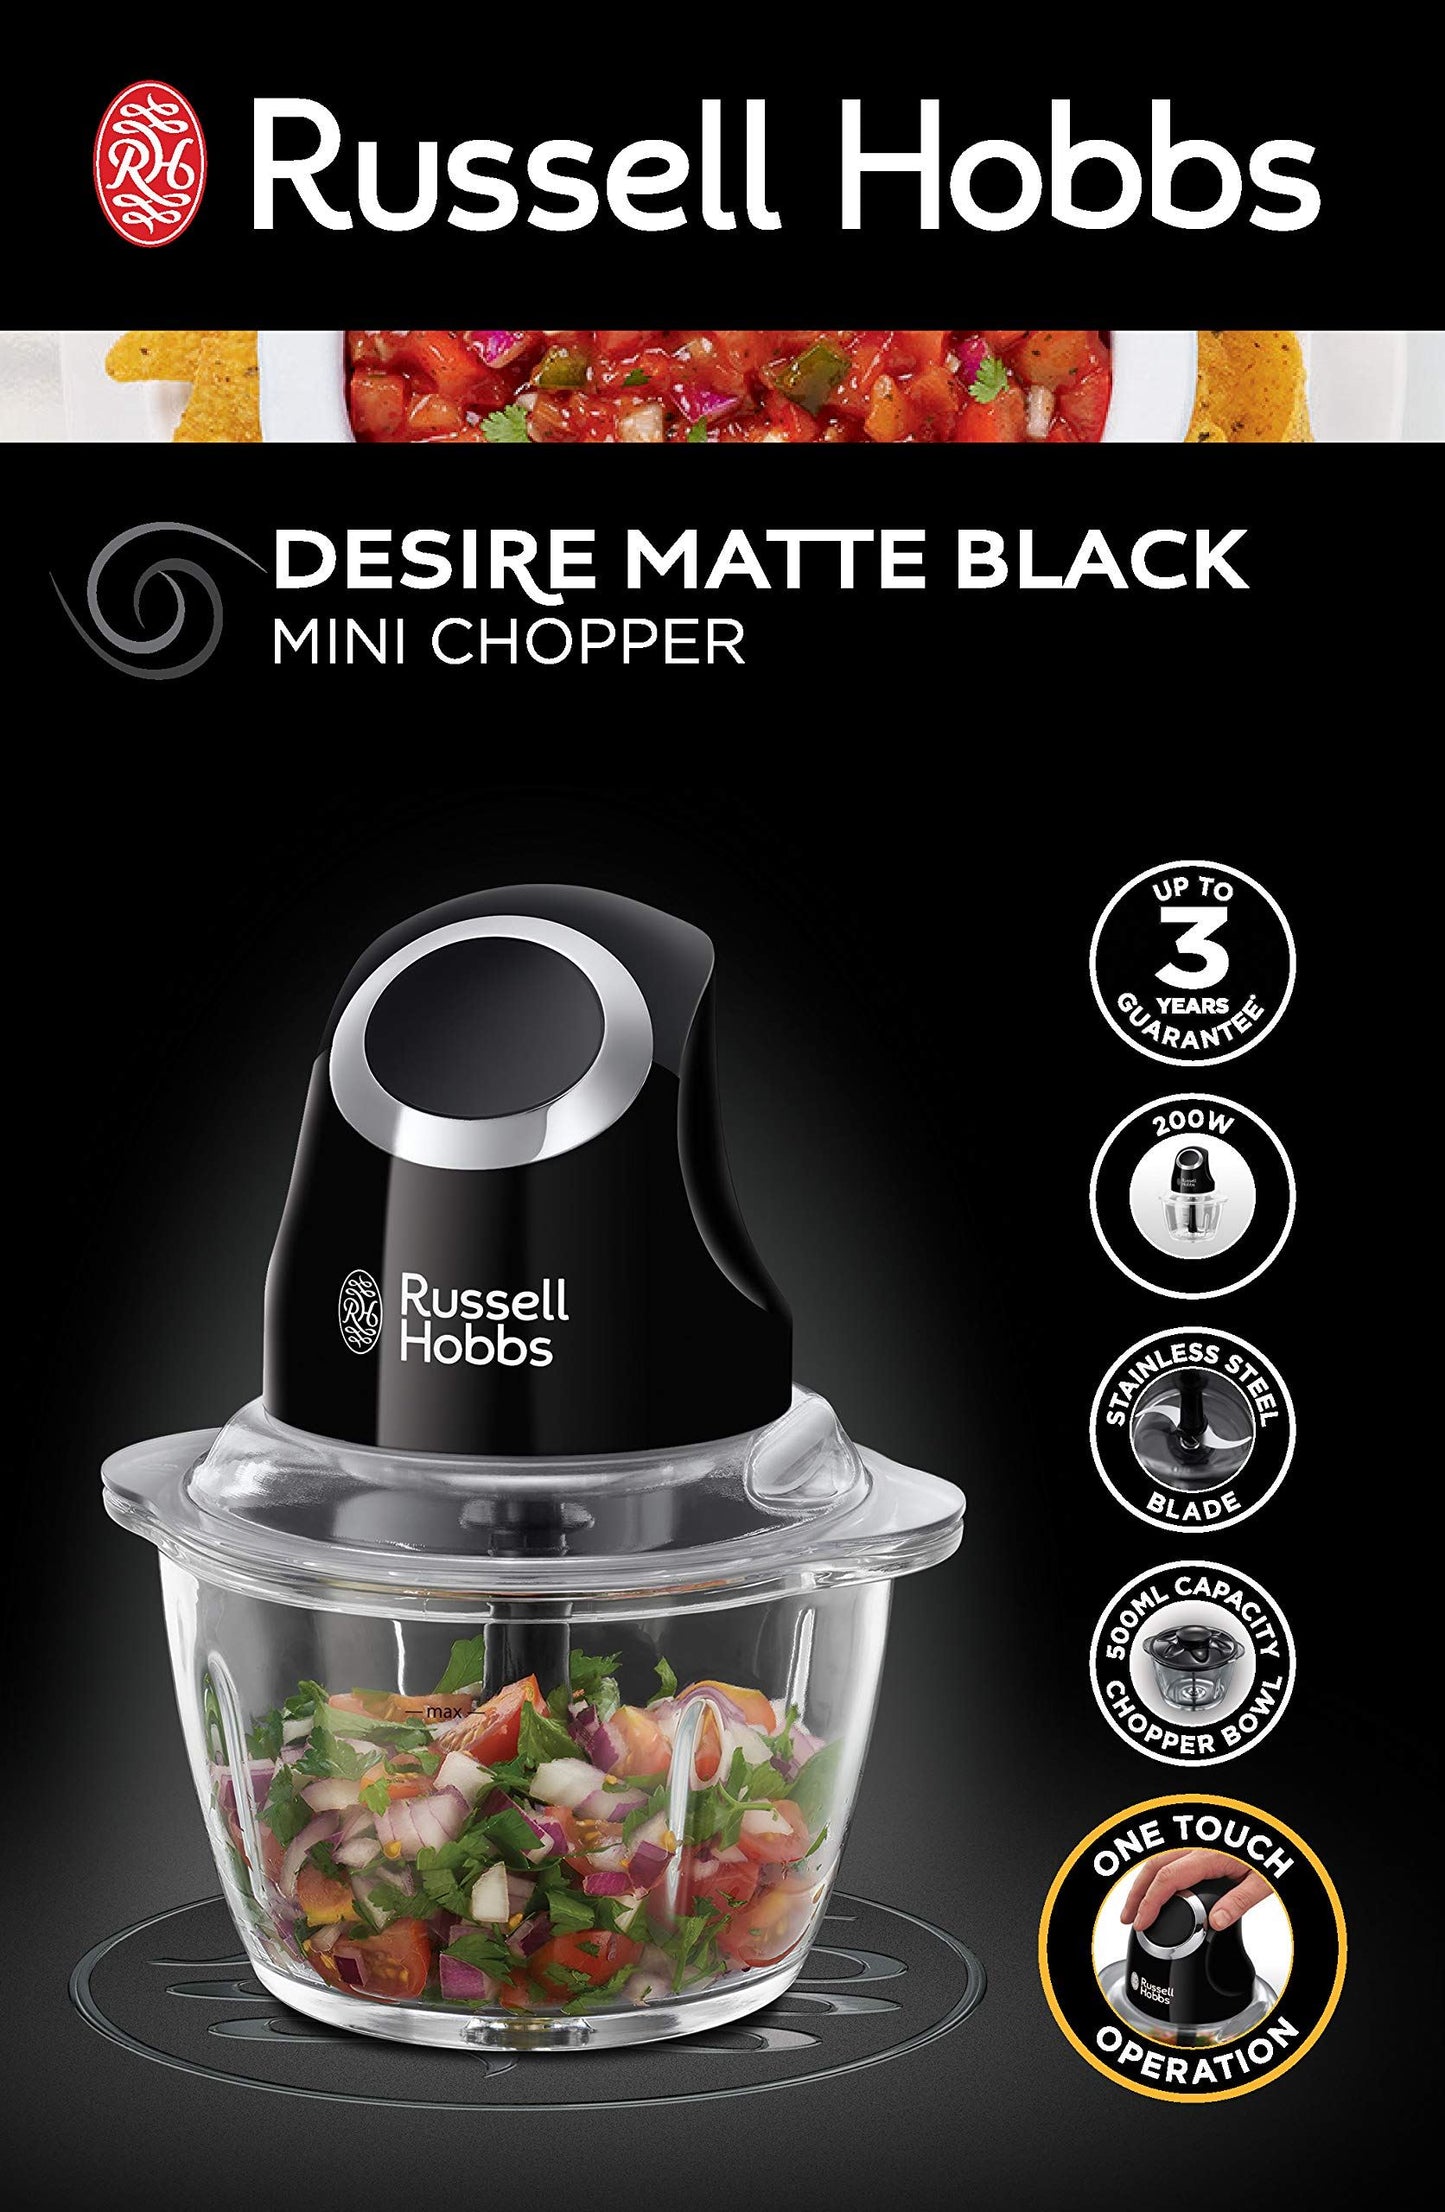 Russell Hobbs 24662 Desire Mini Chopper, Vegetable and Onion Chopper, 500 ml Capacity Glass Bowl, Matte Black, 200 W